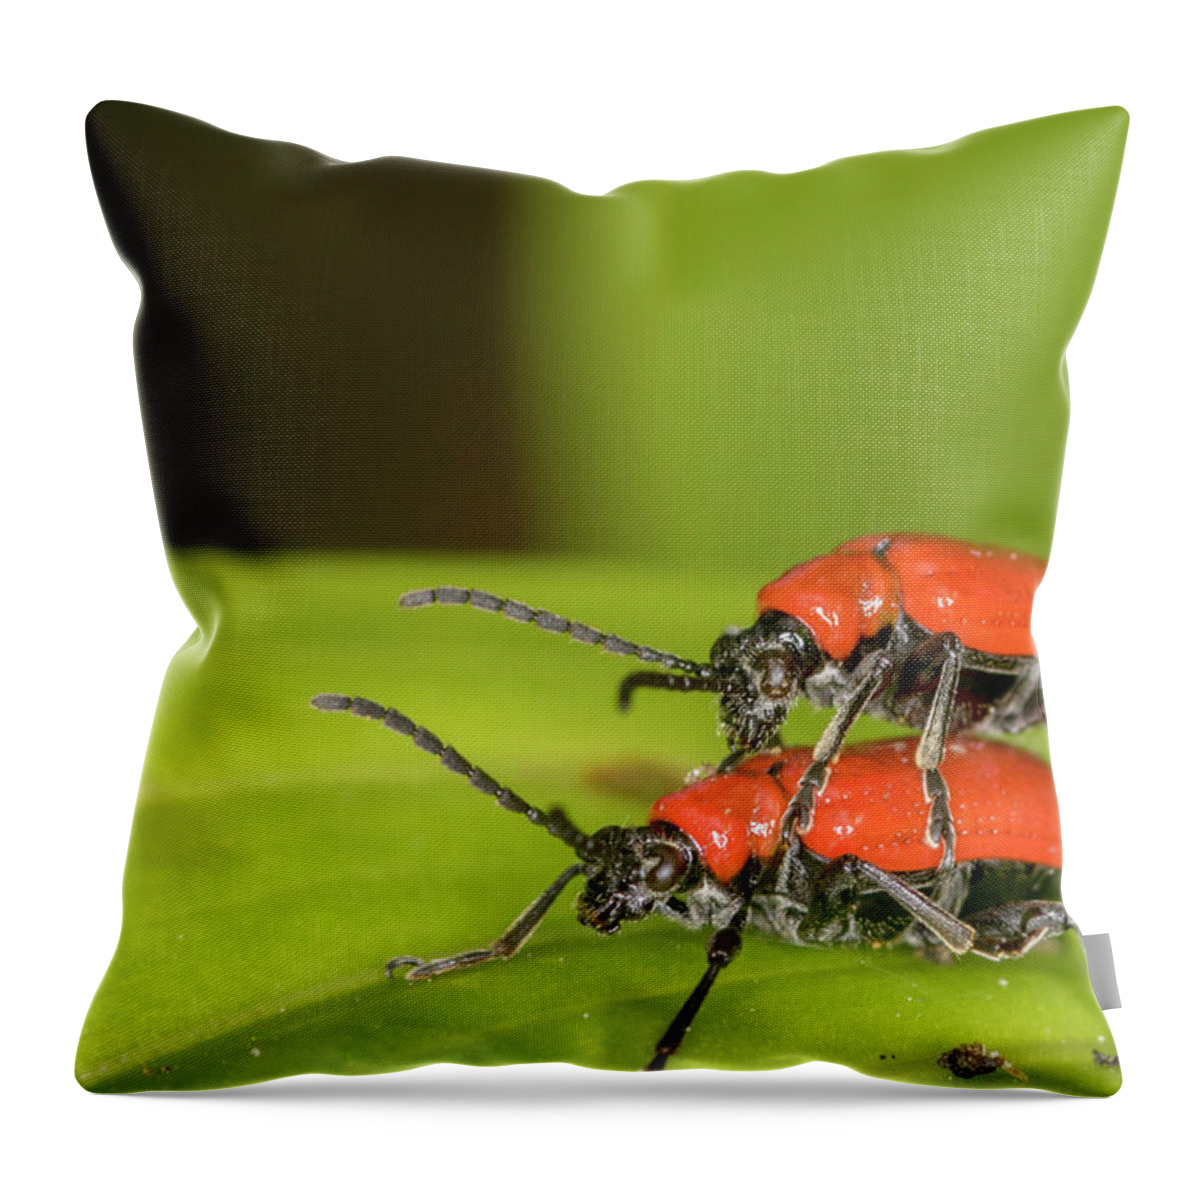 Cardinal Beetle Throw Pillow featuring the photograph Cardinal Beetle by Chris Smith